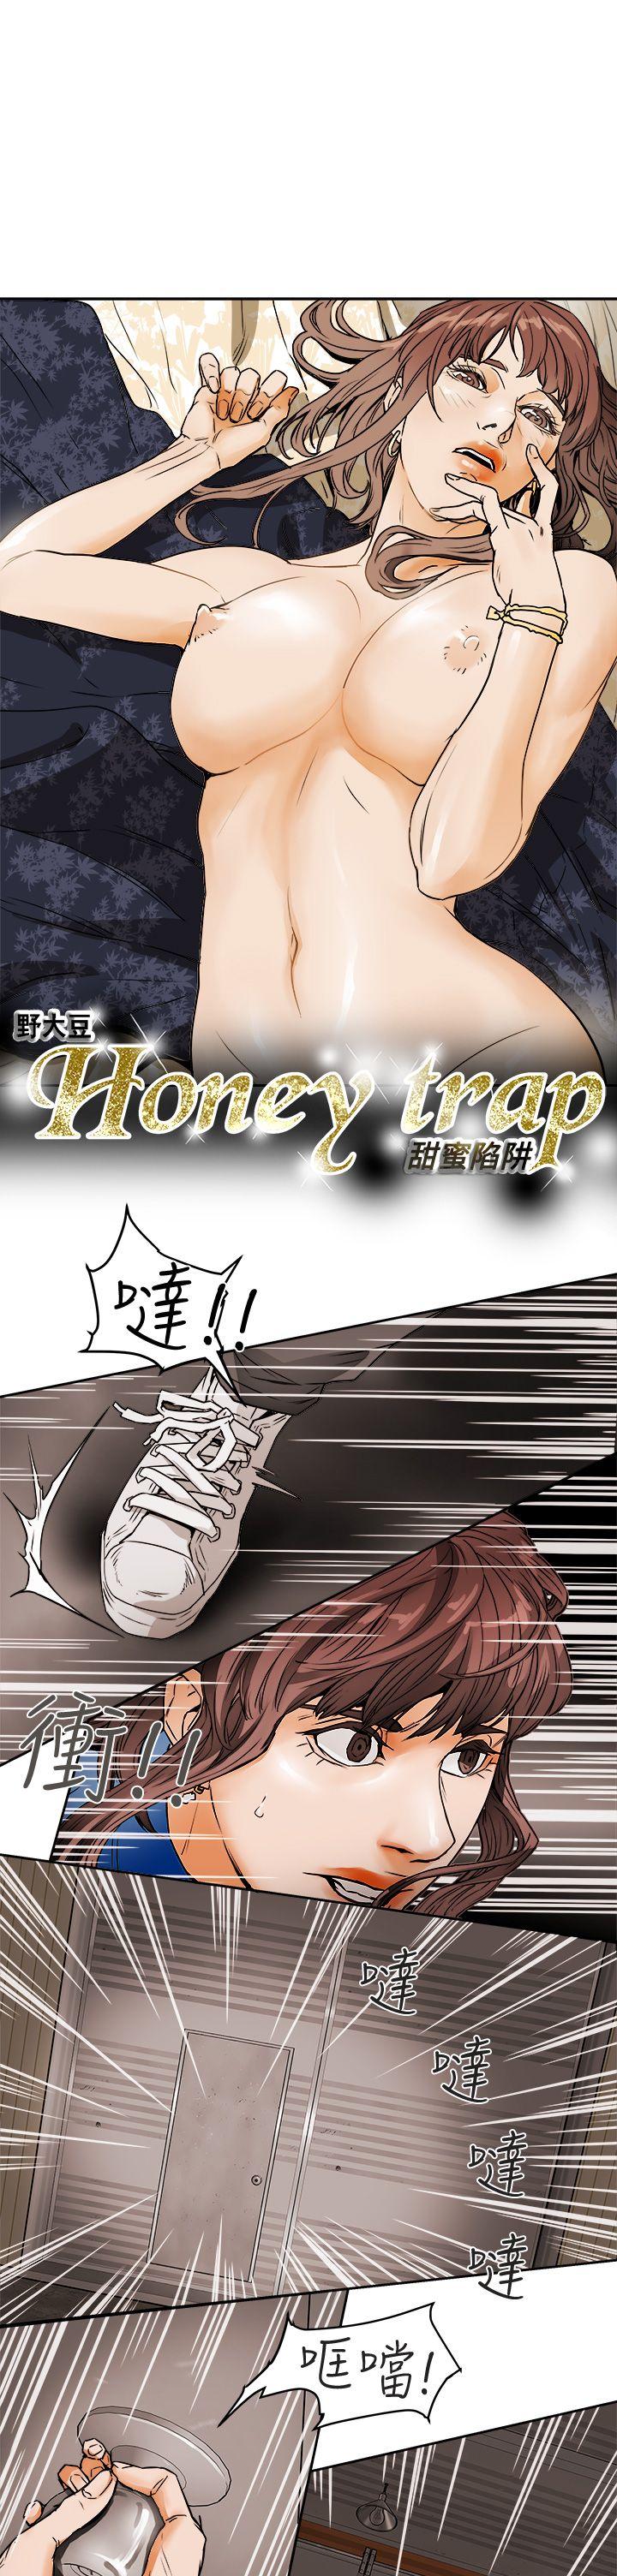 Honey trap 甜蜜陷阱  第96话-仓库里的背水一战 漫画图片5.jpg